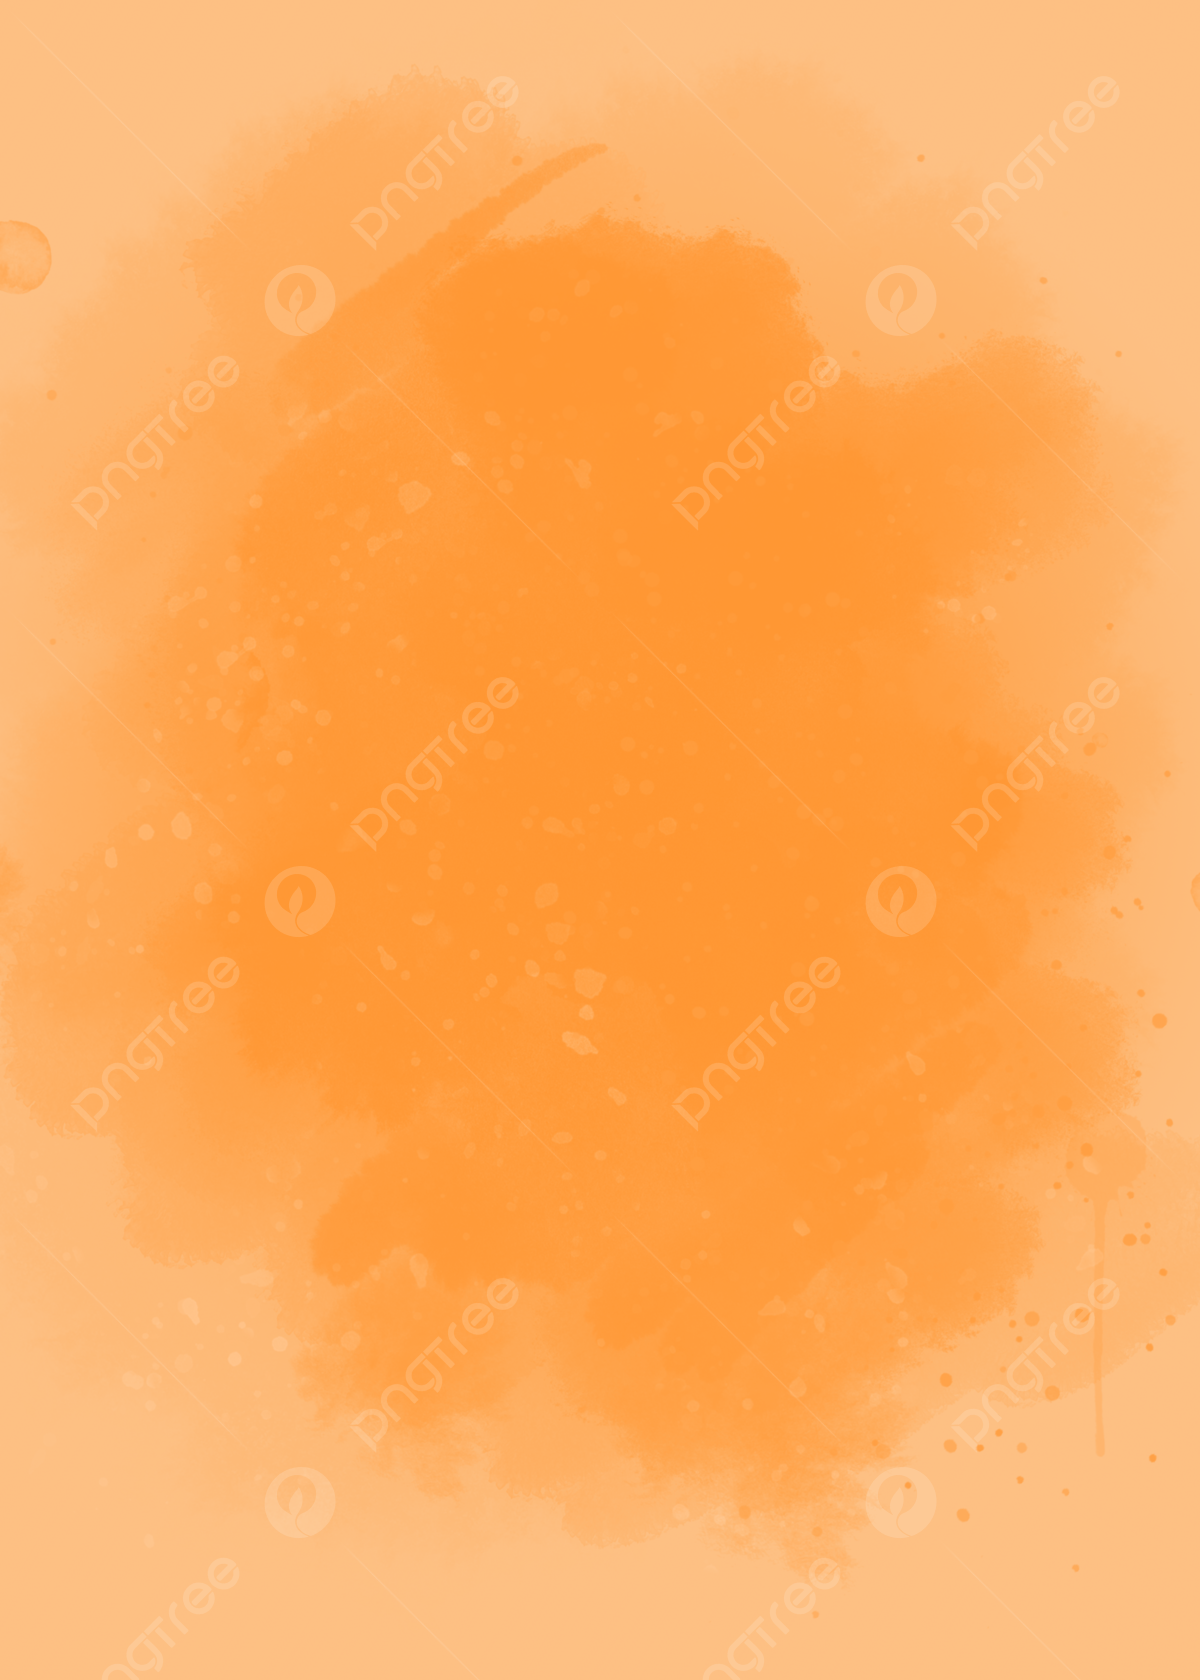 Light orange background watercolor light orange background watercolor grad background image for free download